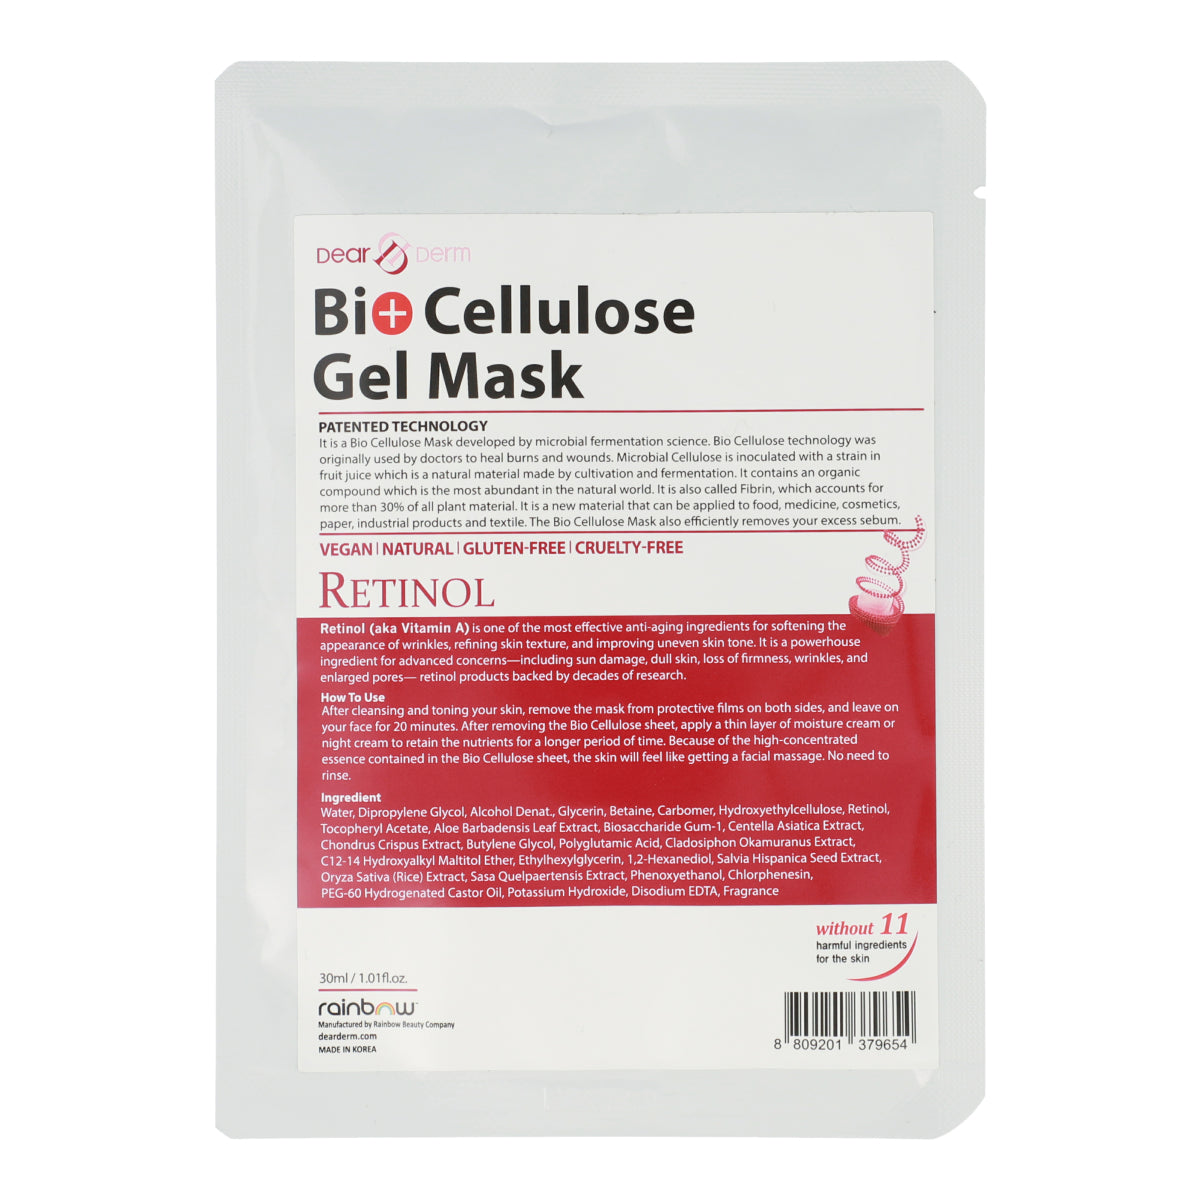 Bio Cellulose Gel Mask Retinol